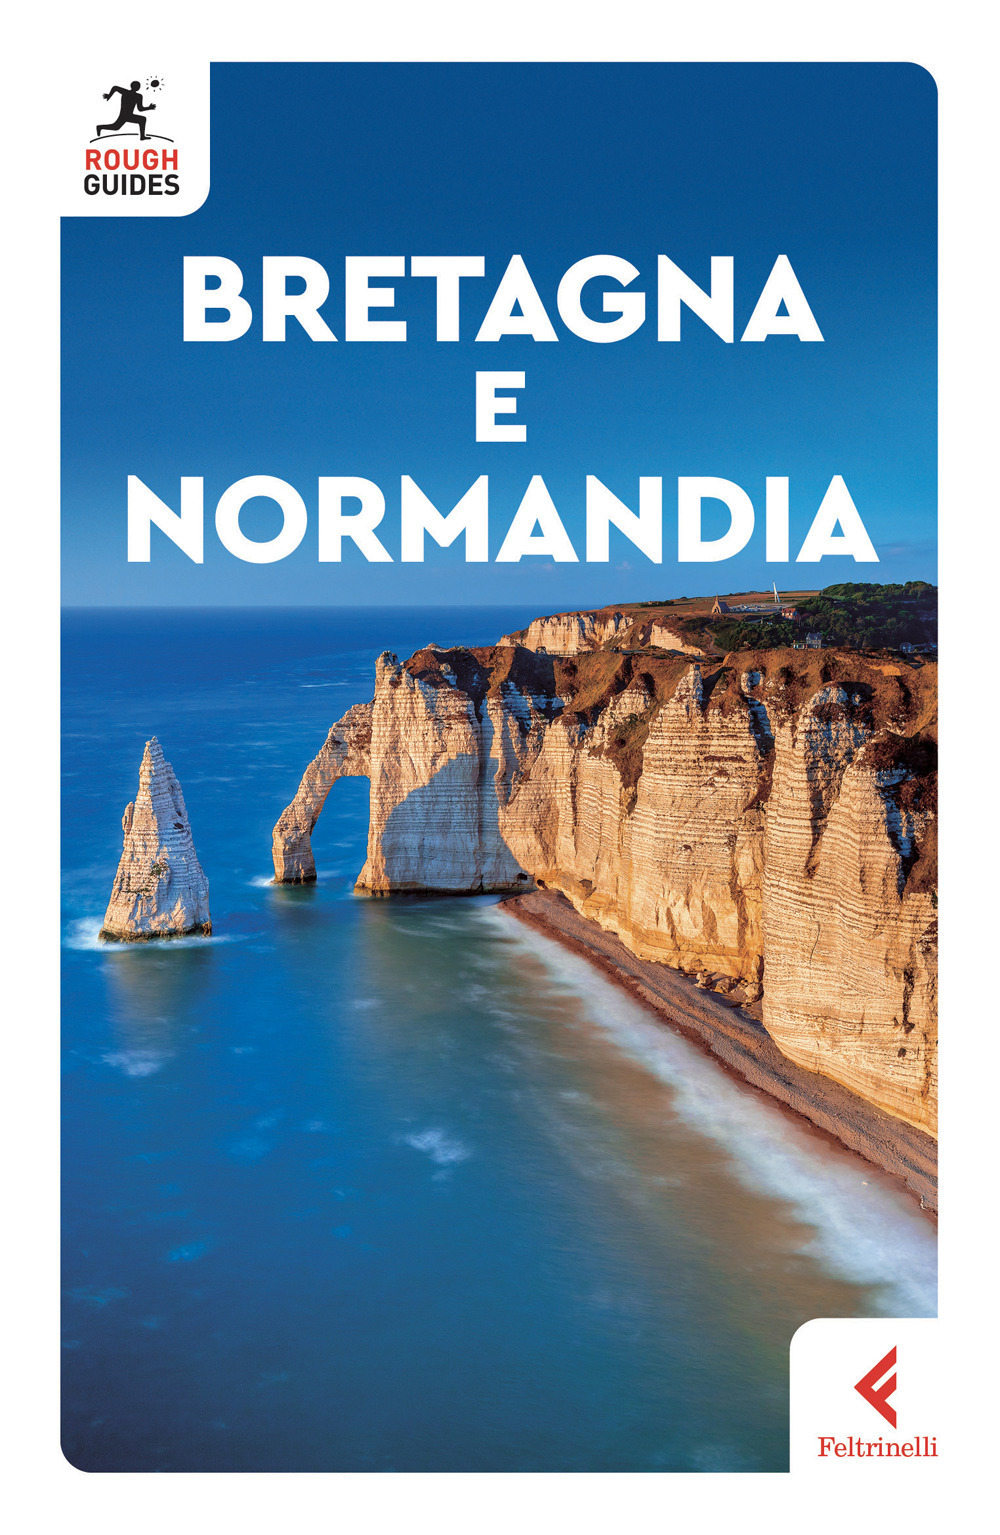 bretagna-normandia-rough-italiano-9788807714825.jpg